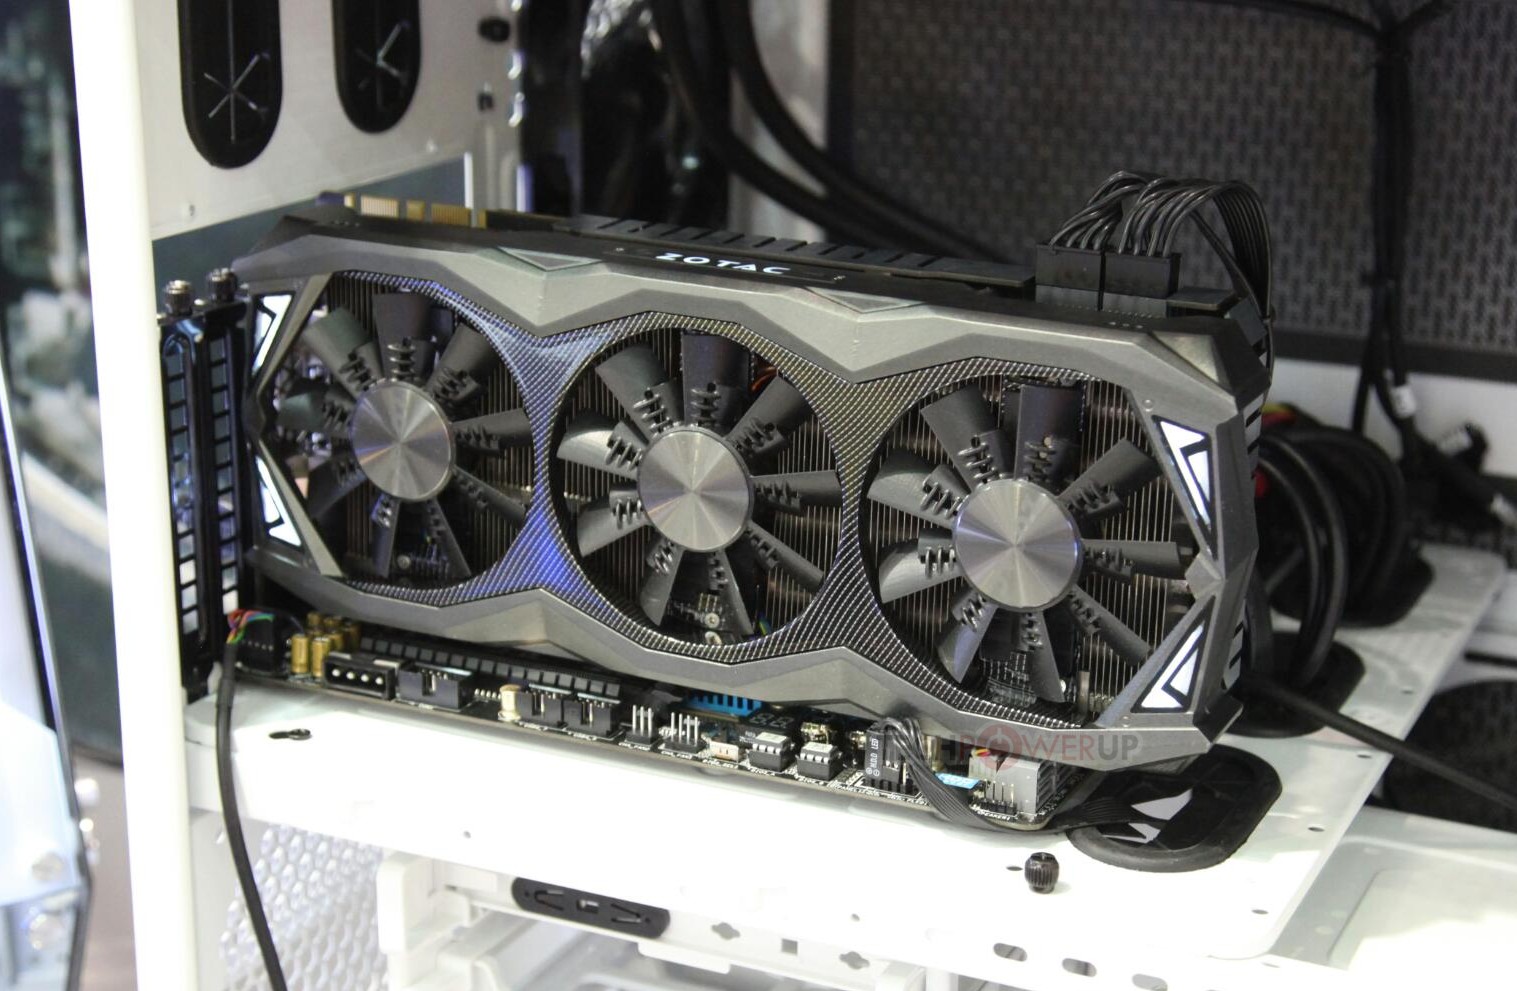 ZOTAC Gives the GeForce GTX 980 Ti a Massive 25% Factory Overclock |  TechPowerUp